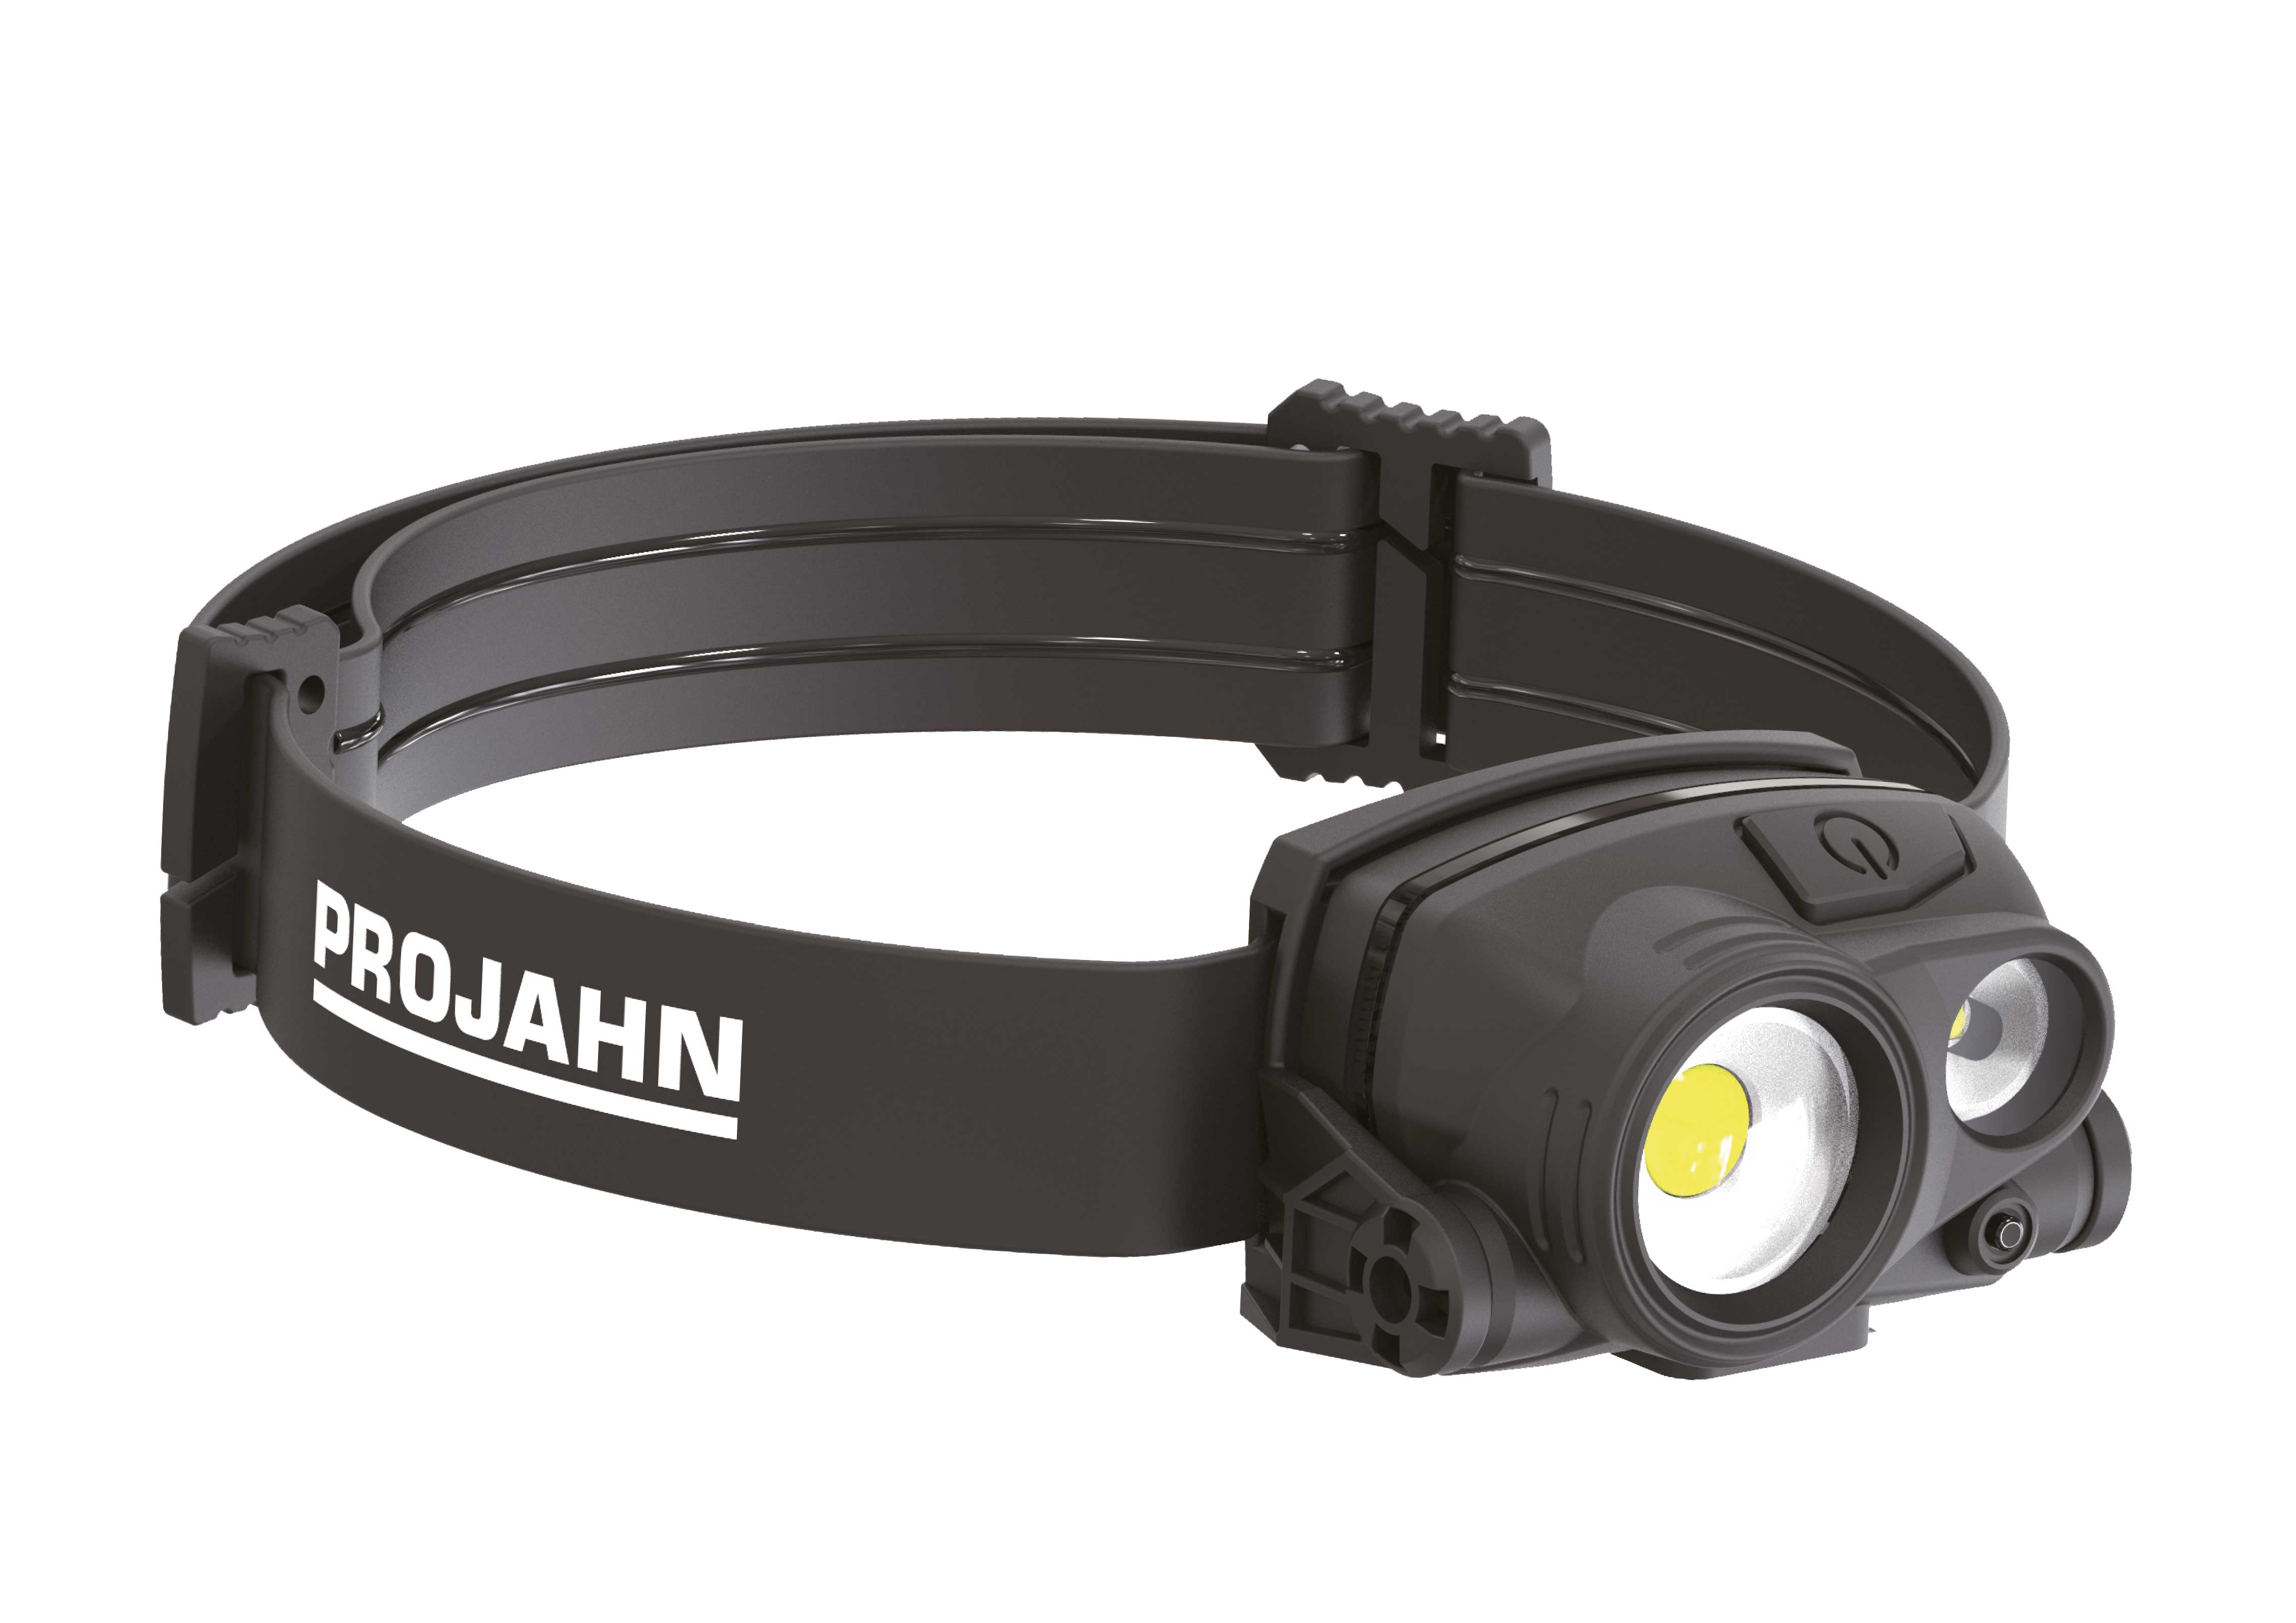 Projahn POWER LED Akku Stirnlampe PJ-SL400 Wiederaufladbar Professional / -398232